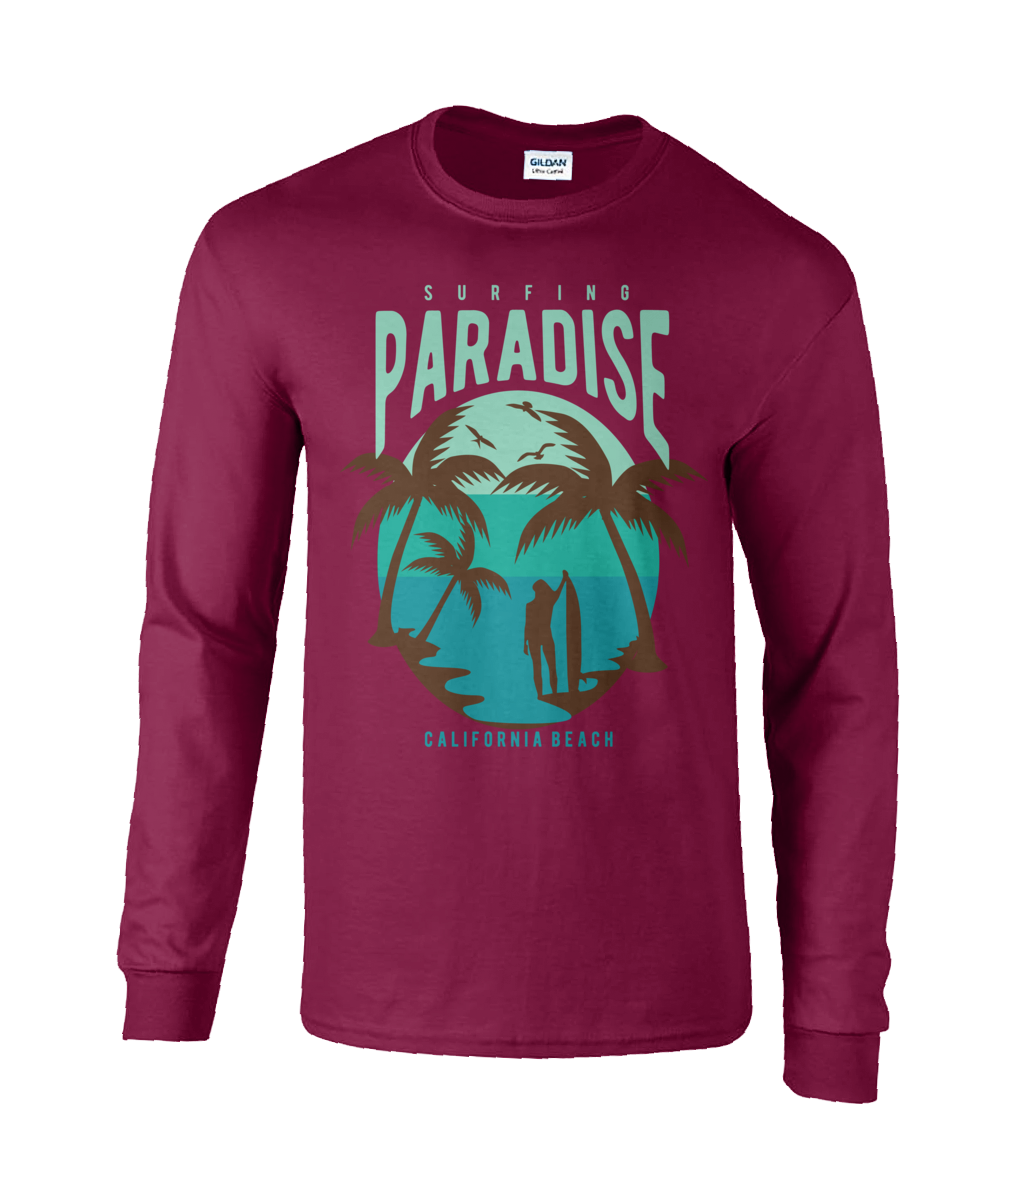 Surfing Paradise California Beach – Ultra Cotton Long Sleeve T-shirt